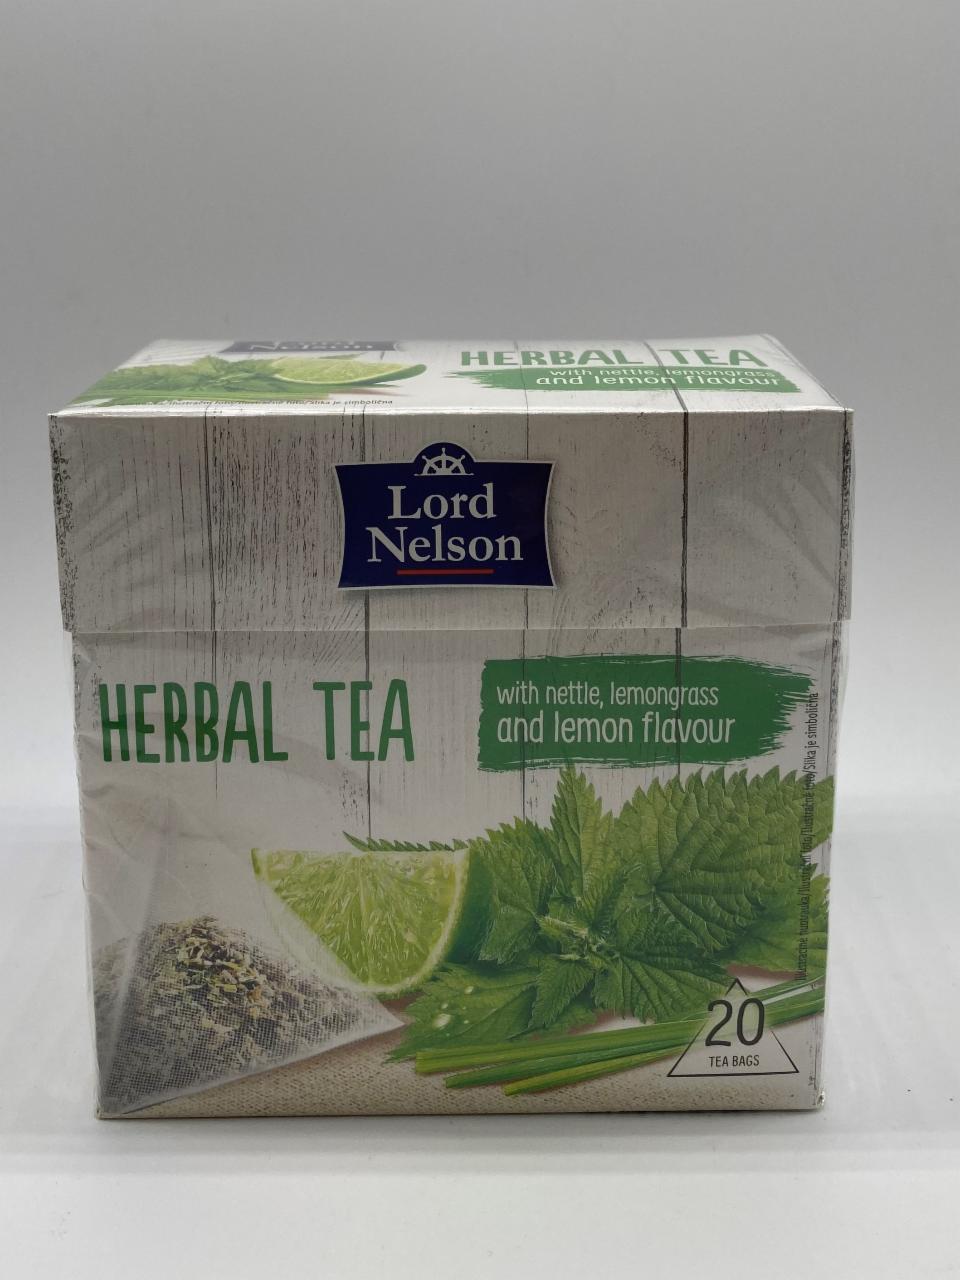 Fotografie - Herbal tea with nettle, lemongrass and lemon flavour Lord Nelson